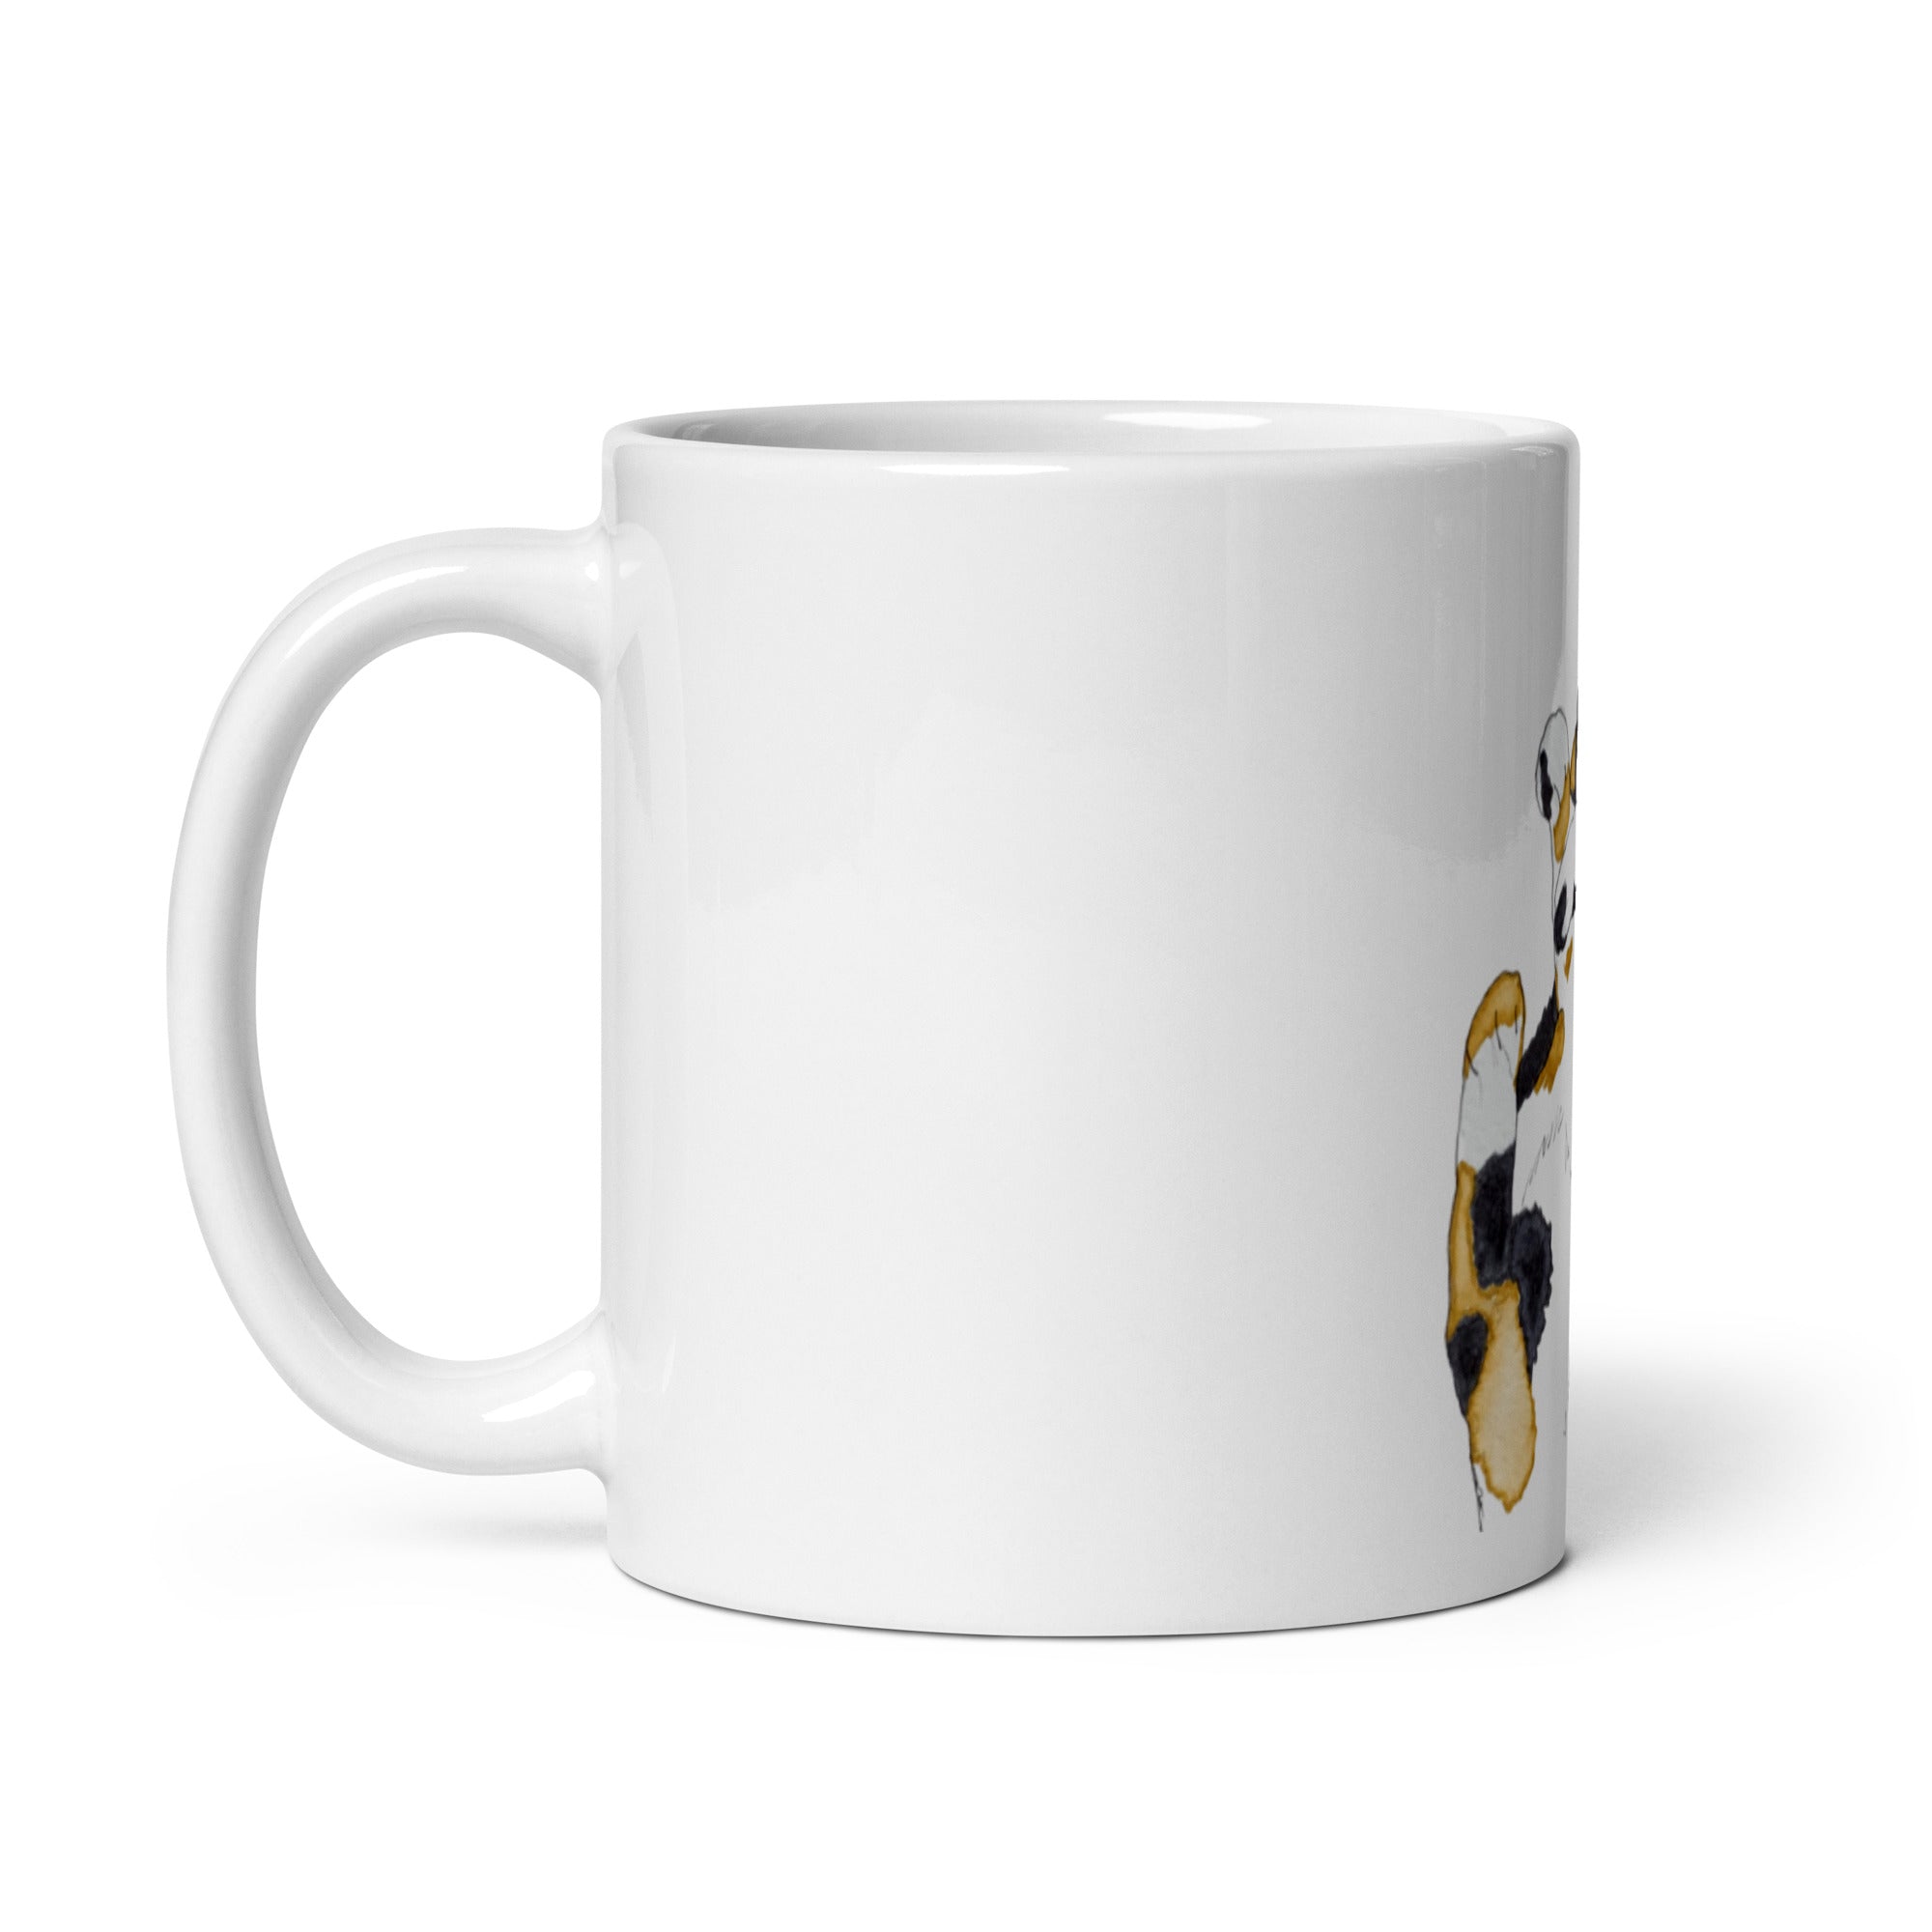 Sleeping Kitty White glossy mug - Art Love Decor